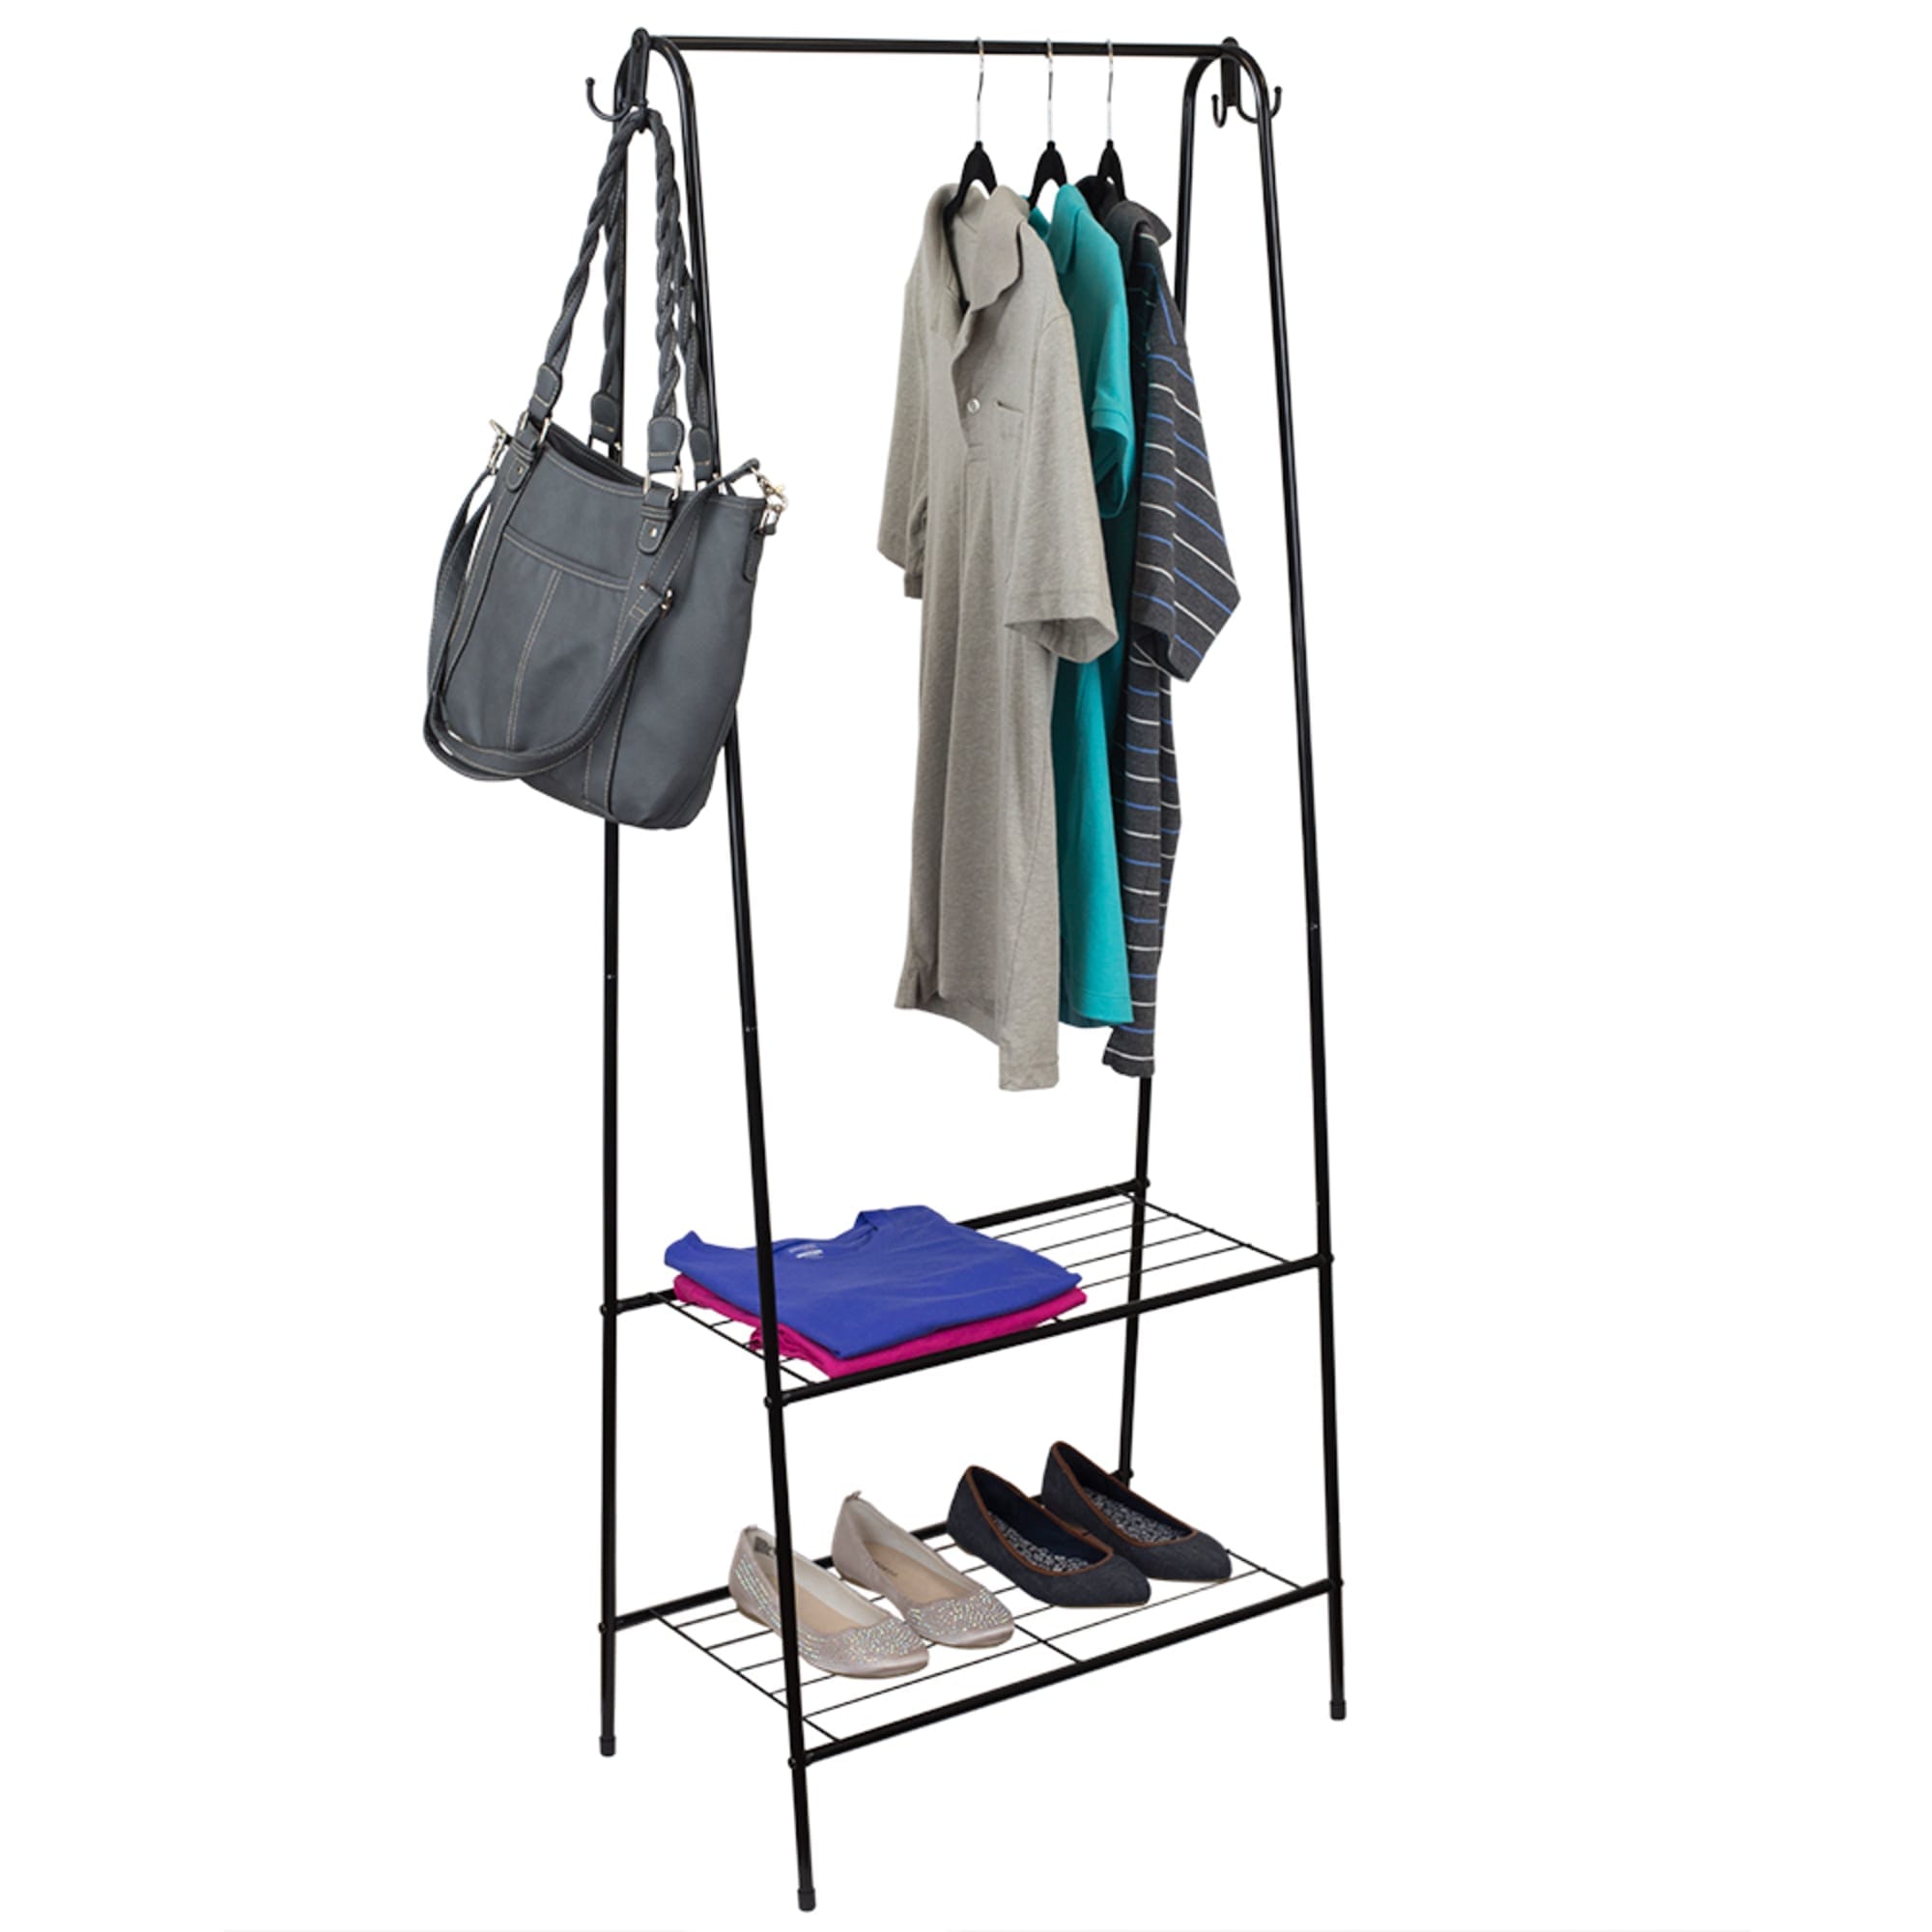 Home Basics 2 Shelf Free-Standing Garment Rack with Hooks, Black $20.00 EACH, CASE PACK OF 4